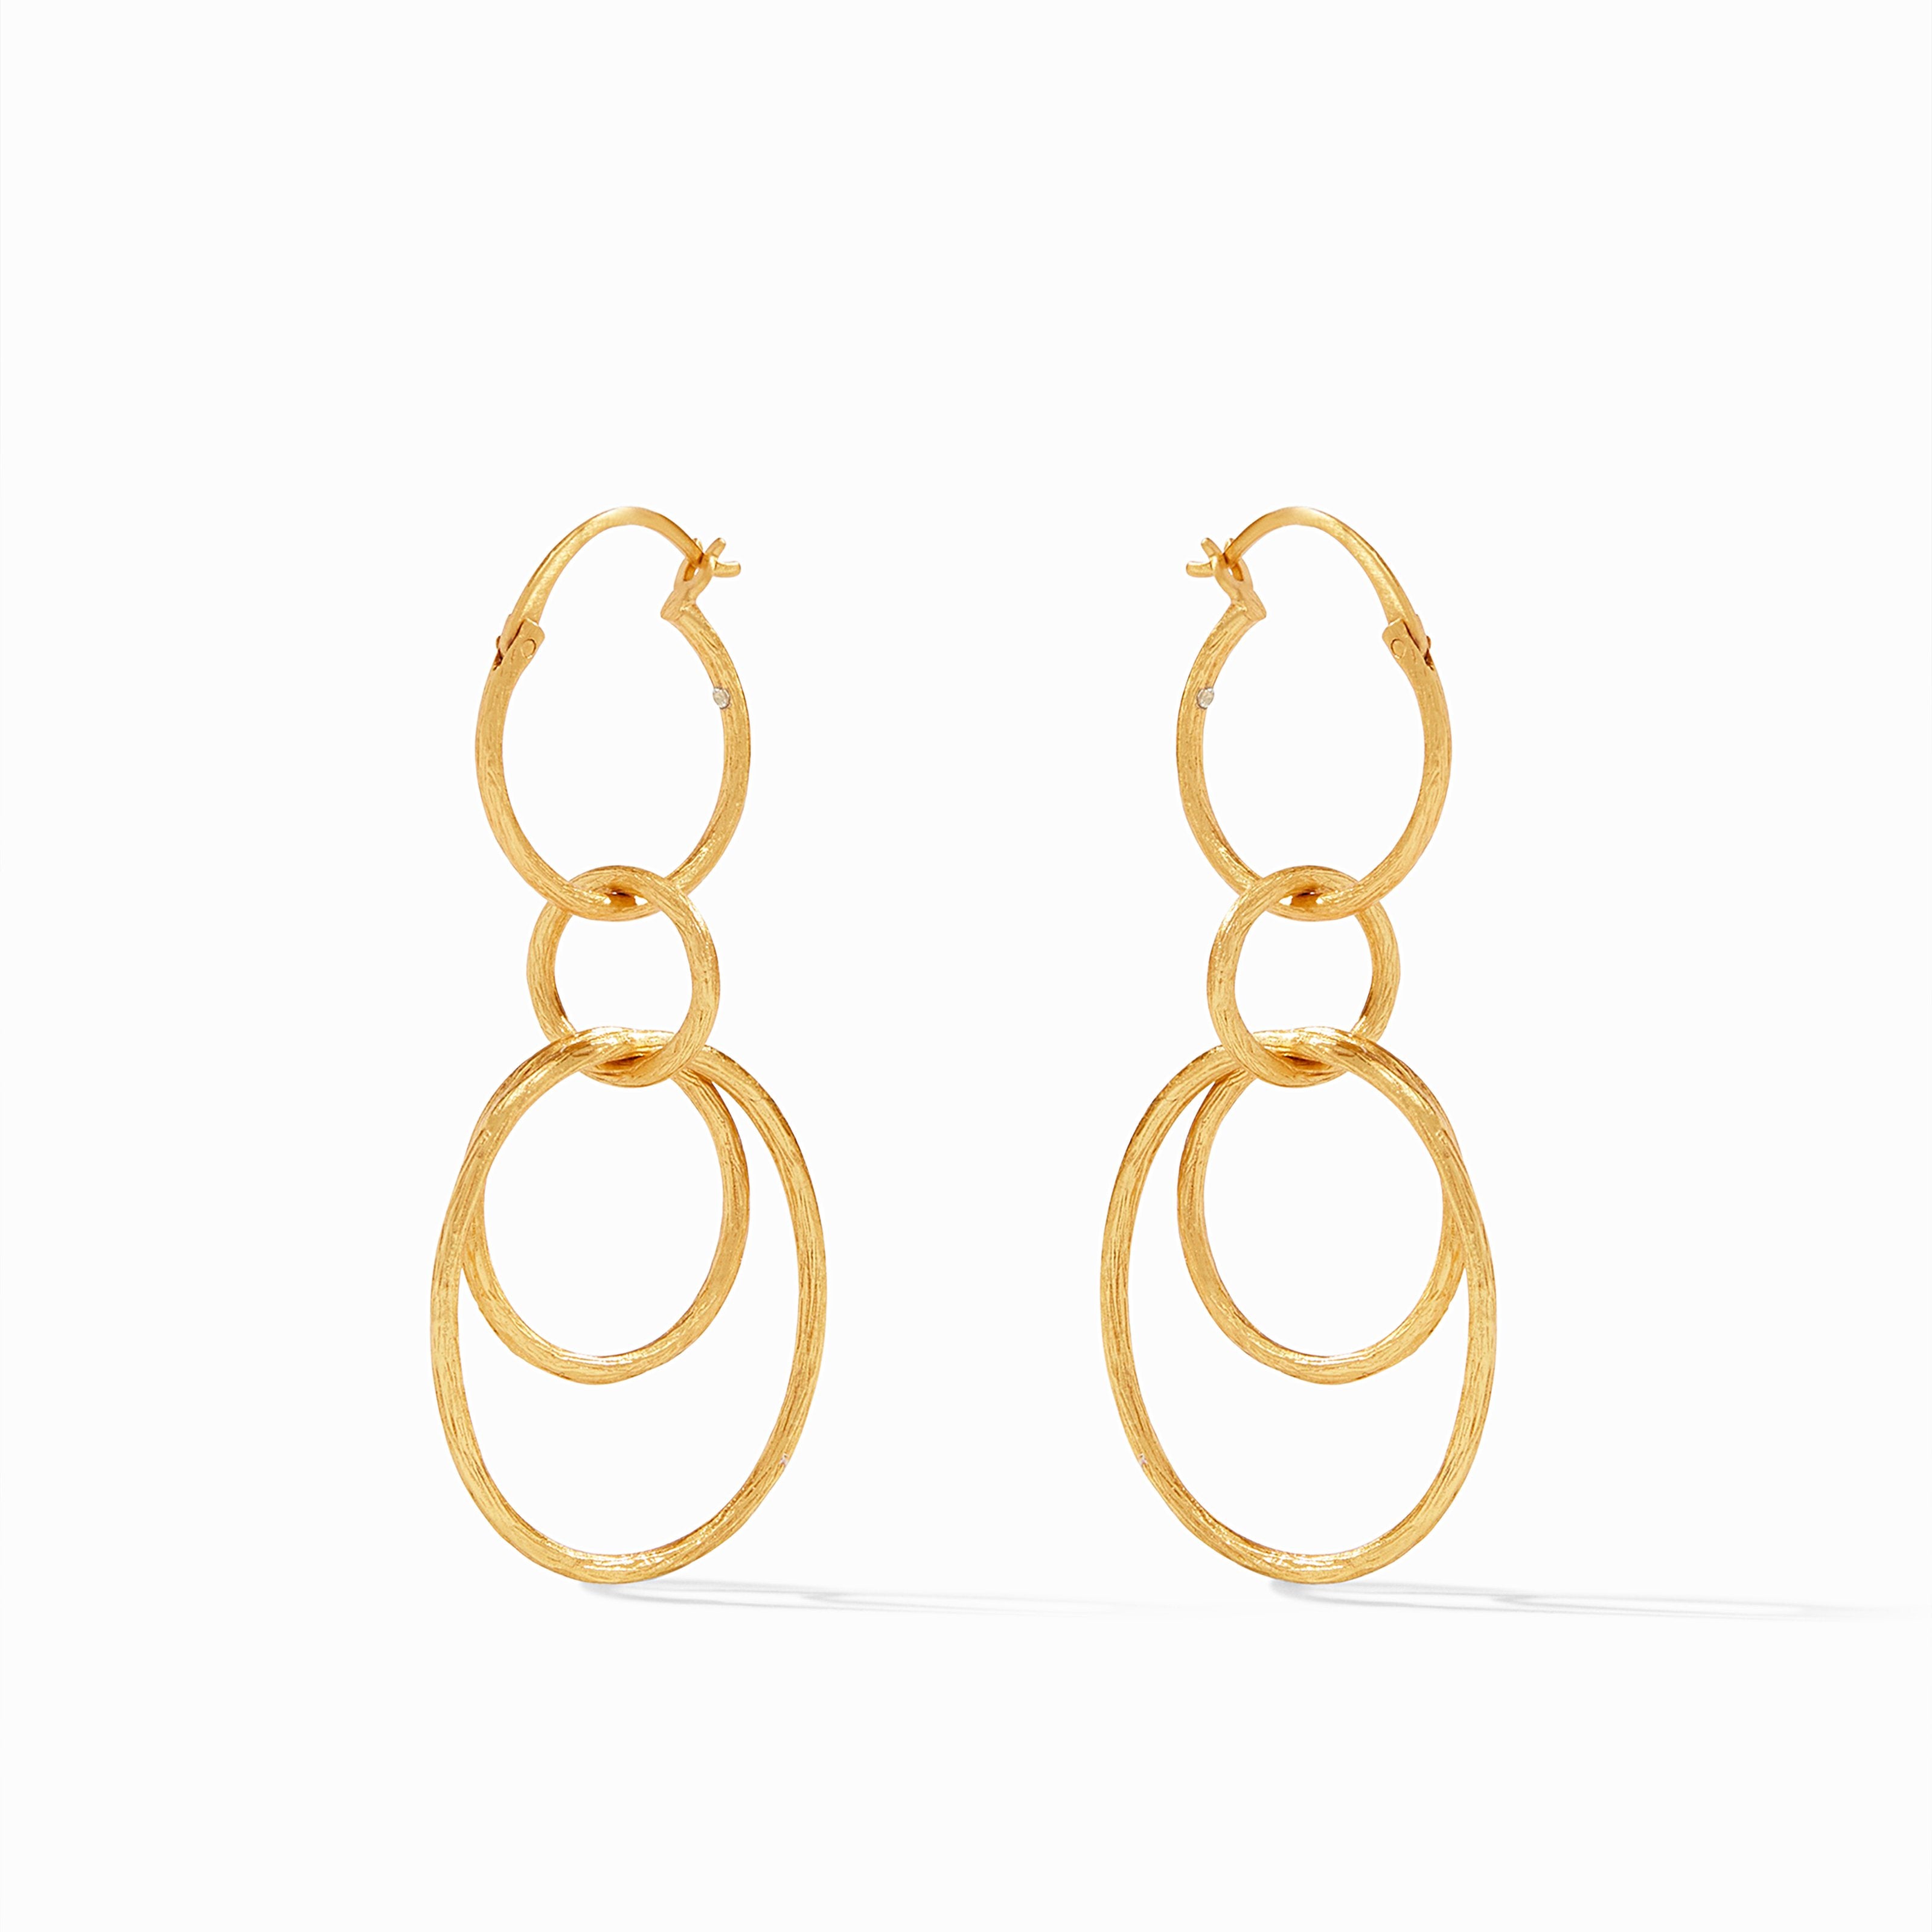 Vos Simone | Julie 3-in-1 Gold Earrings